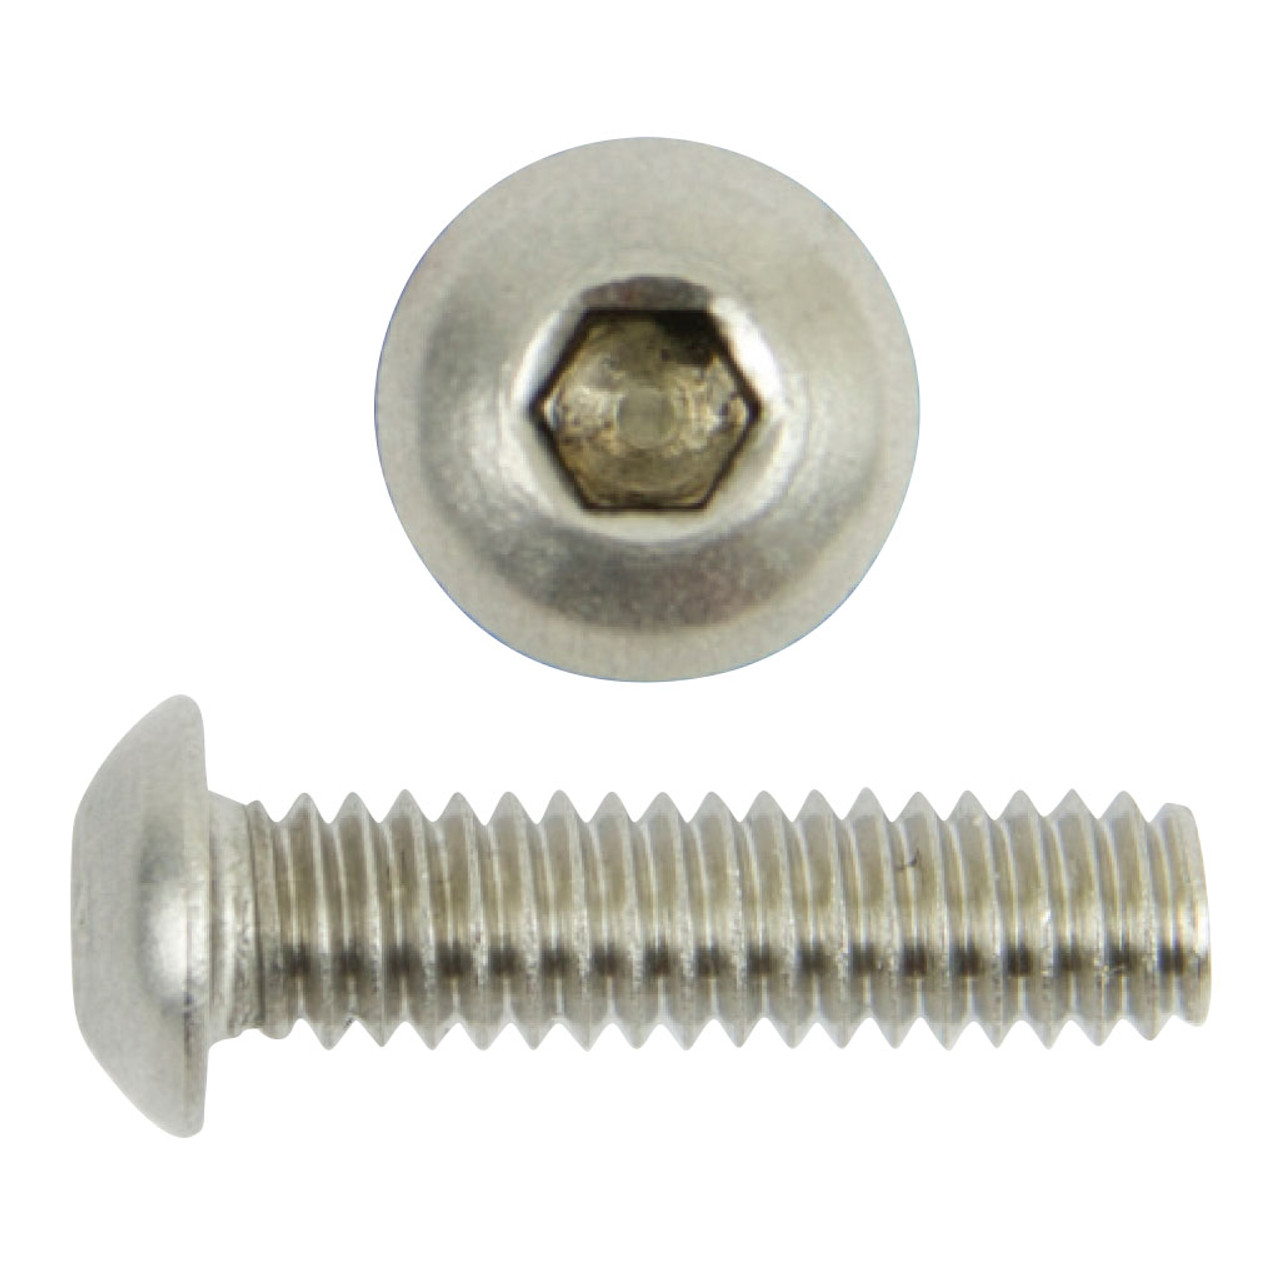 Button Head Socket Cap Screw Stainless Steel Screws UNC 1/4-20 x 3/4 Qty 100 